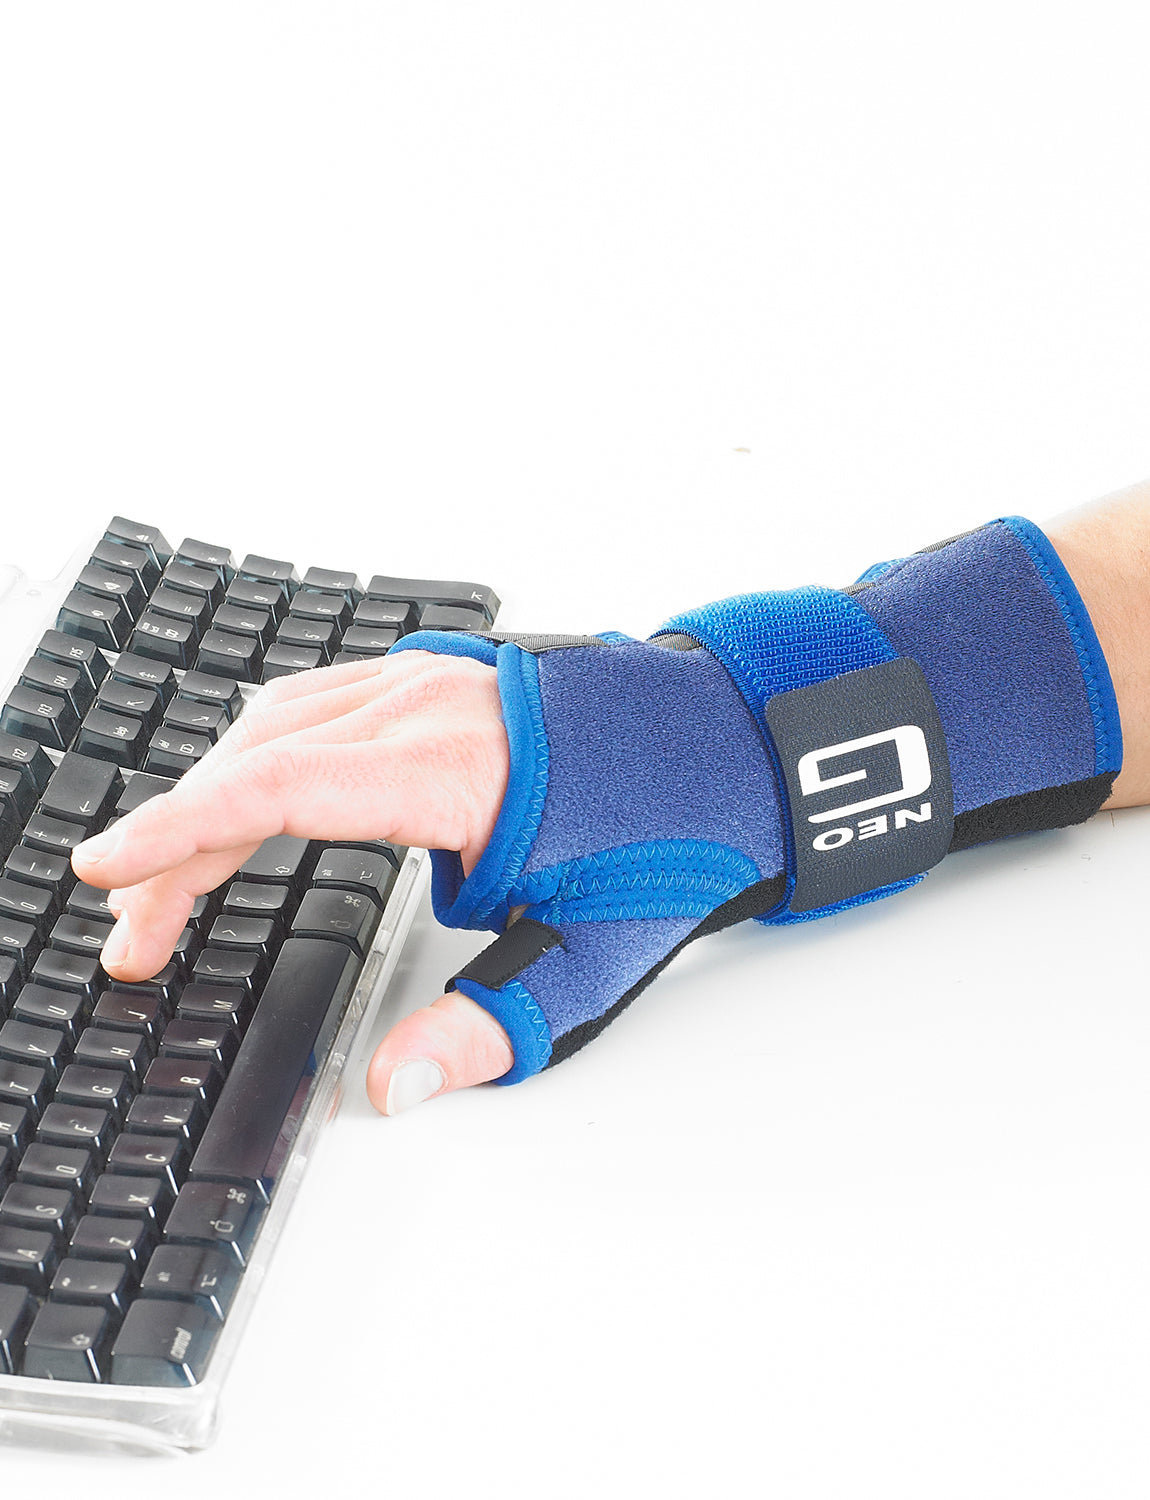 Neo G Stabilized Wrist and Thumb Brace – Neo G USA